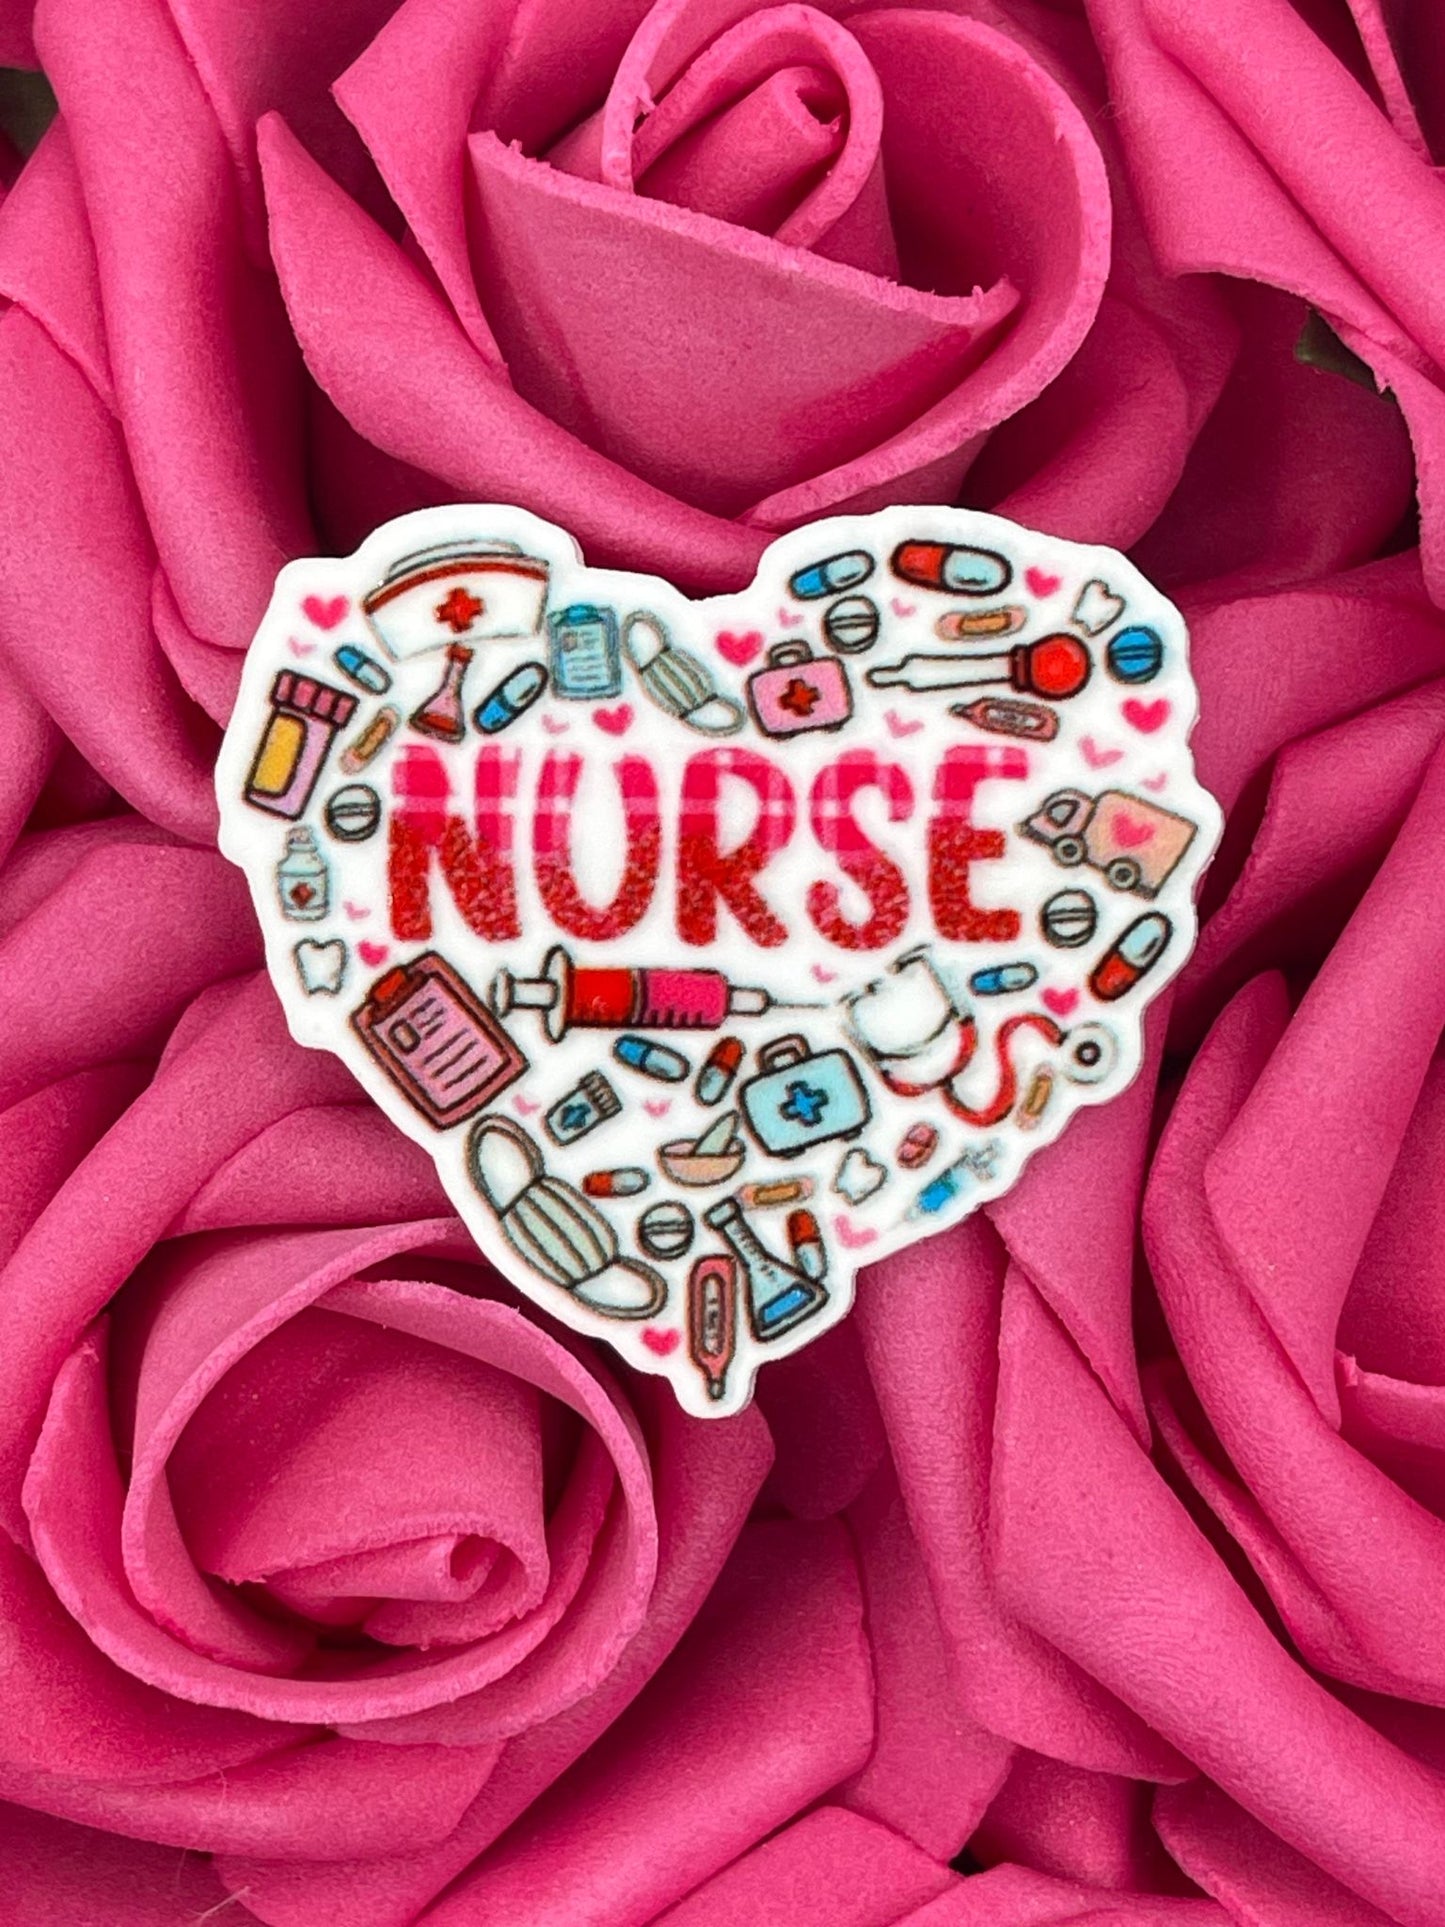 #932 Nurse heart collage